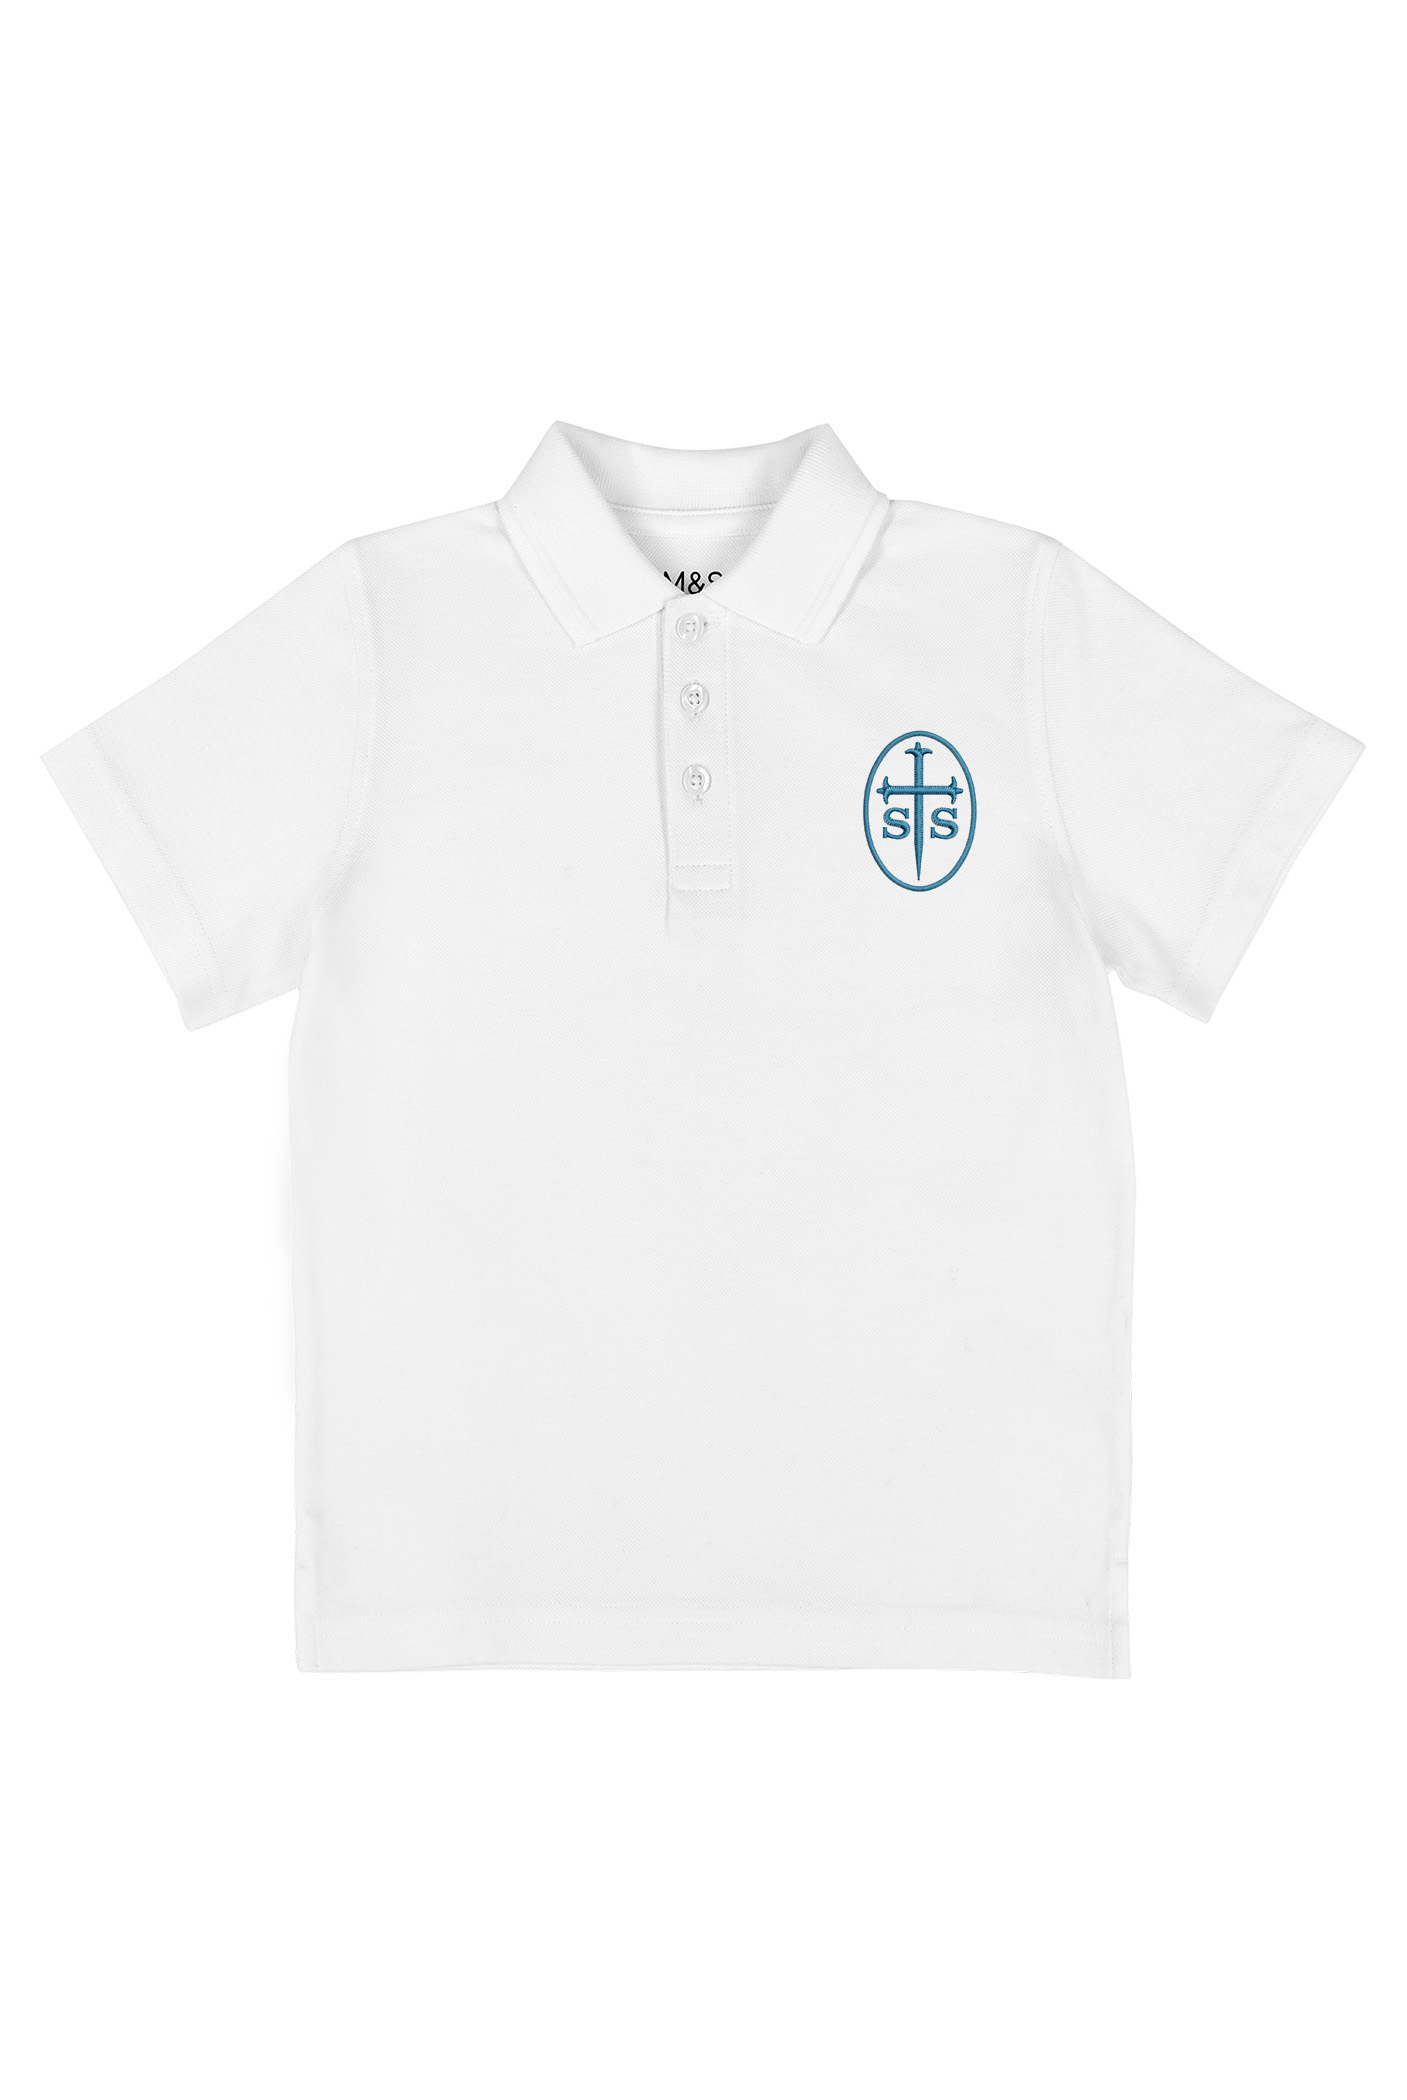 Oxton St. Saviour's CE School Unisex S/S Cotton Polo Shirt